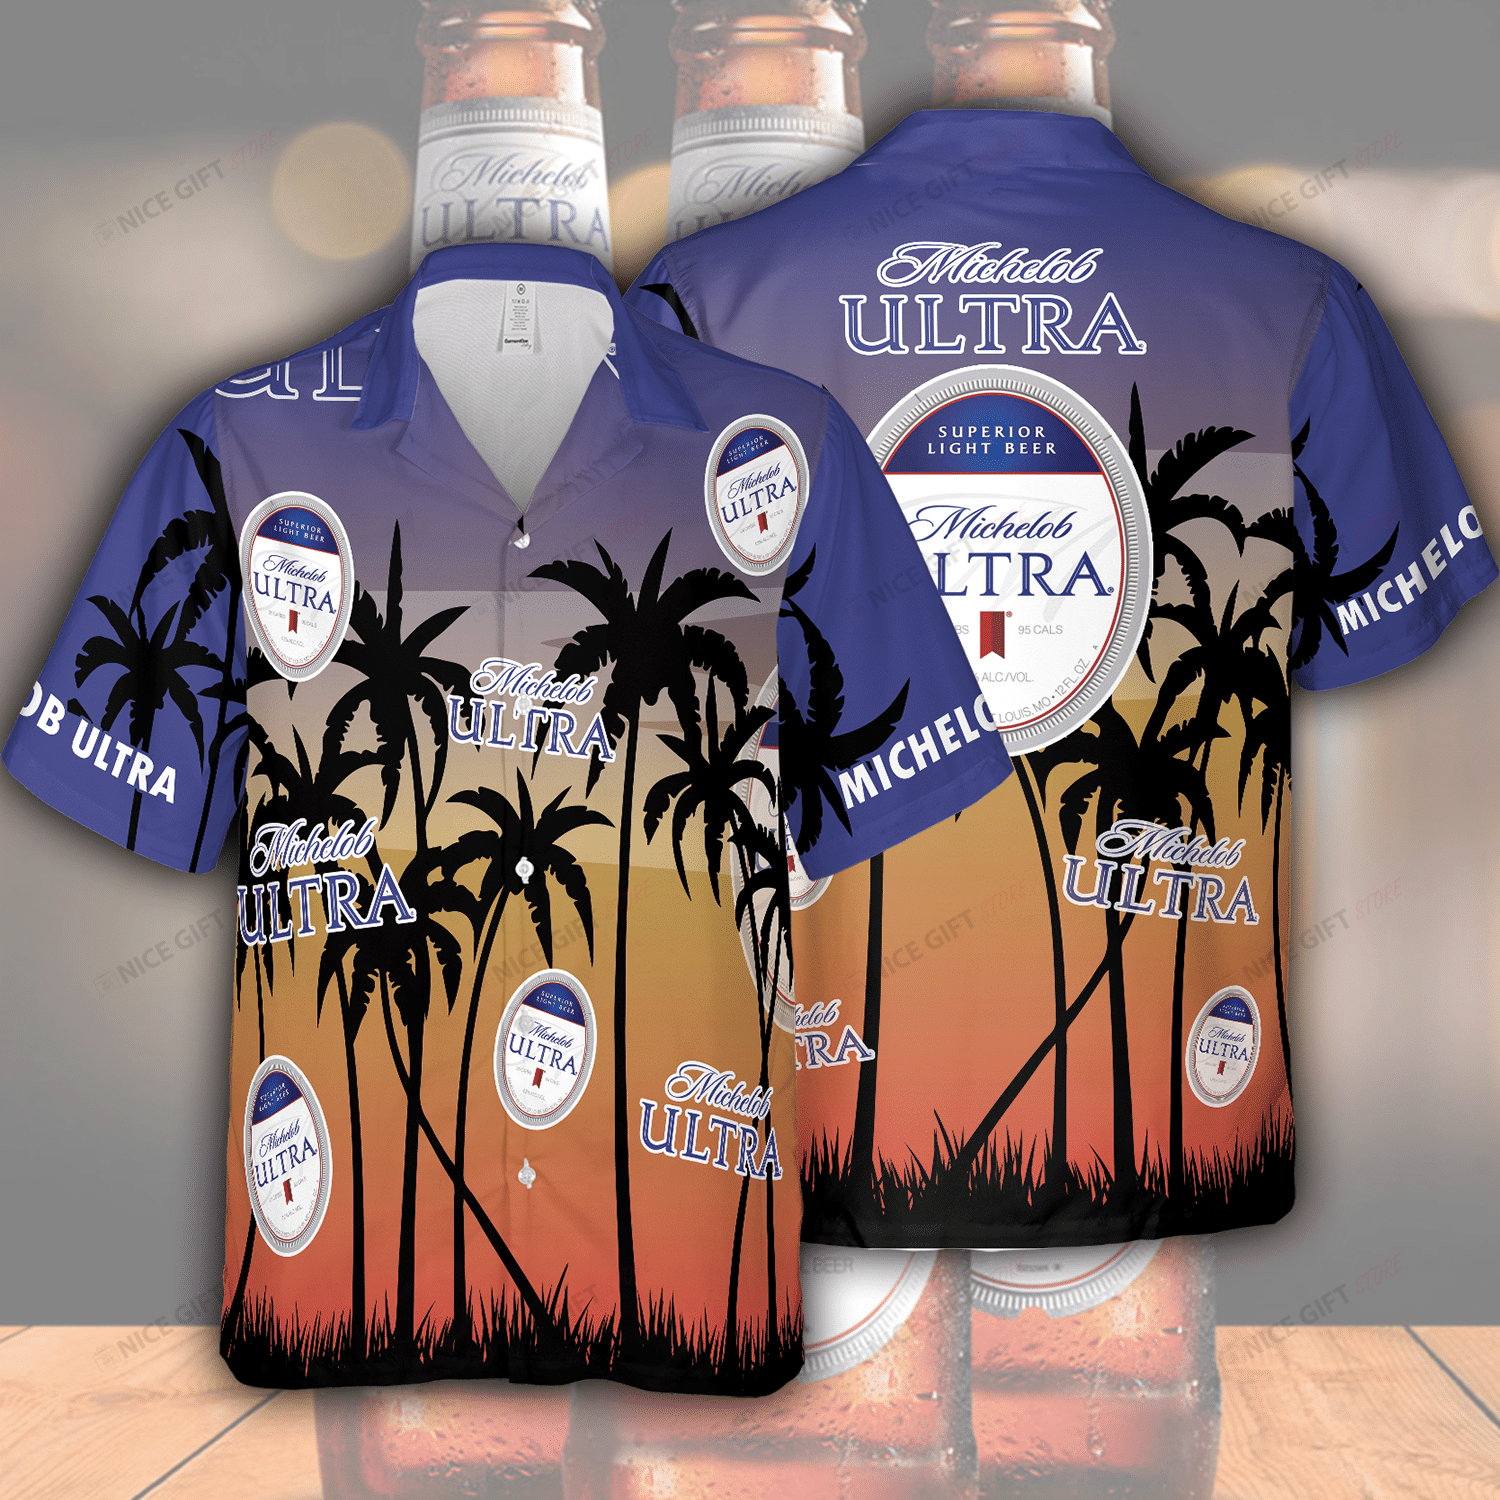 This Hawaiian Shirt Keeps You Comfortable And Free While You Enjoy The Sun Word2